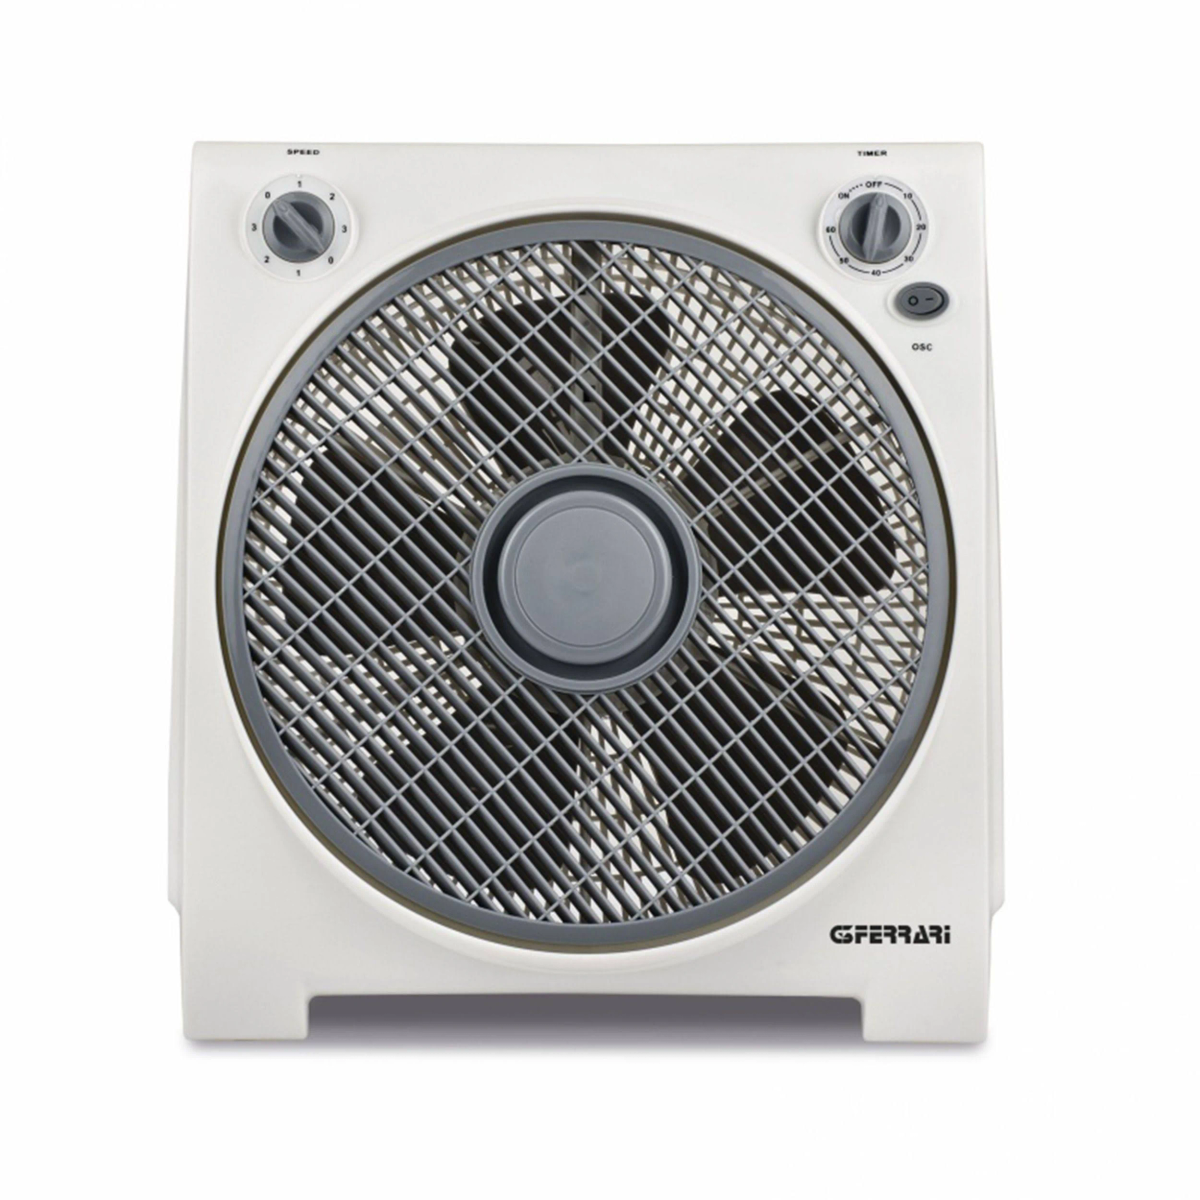 G3 FERRARI Greco Ventilator Watt) (45 Weiß